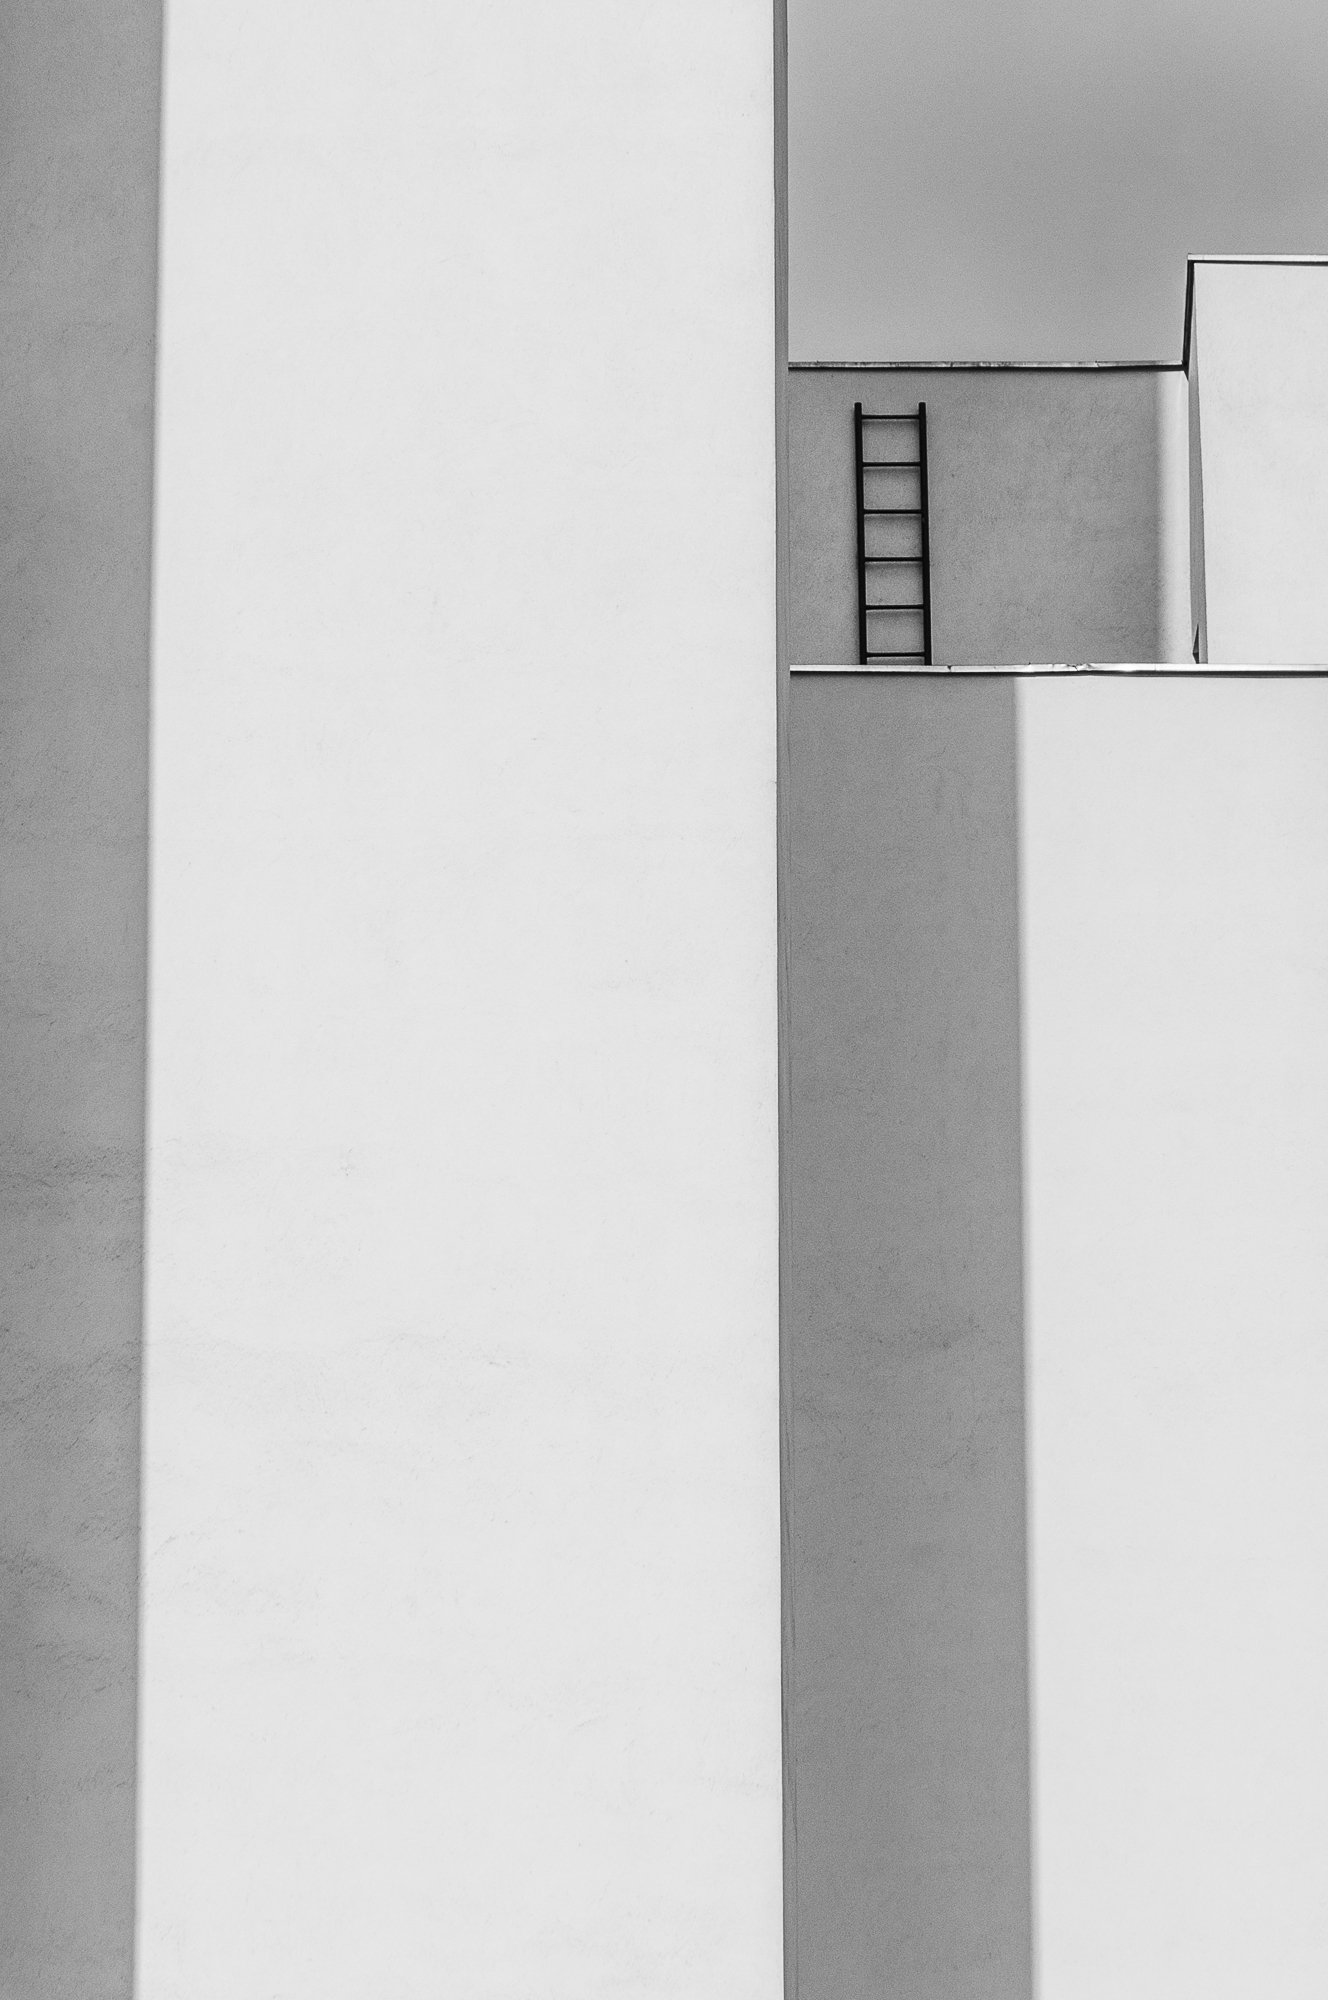 Adam Mazek Photography Warsaw (Warszawa) 2018. Photography exhibition. The Wall. Mur. Minimalism. Abstraction. Geometry. Ladder.